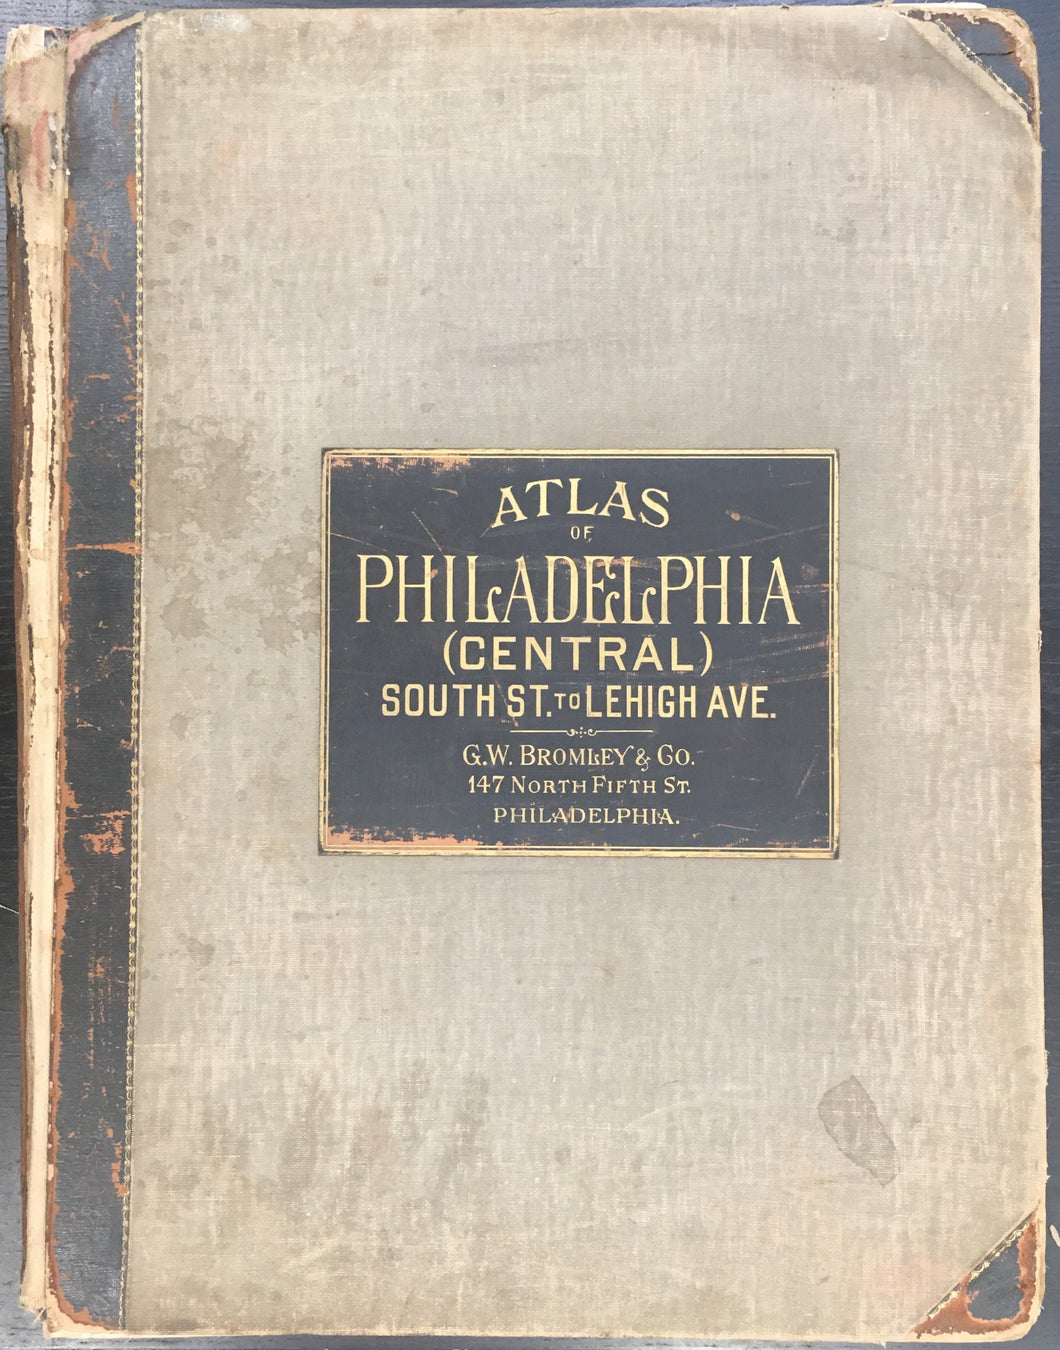 Bromley, G. W.  “Atlas of the City of Philadelphia: Wards: 5-20, 28, 29, 31, 32, 37, & 47.”  [Central Philadelphia].  1922